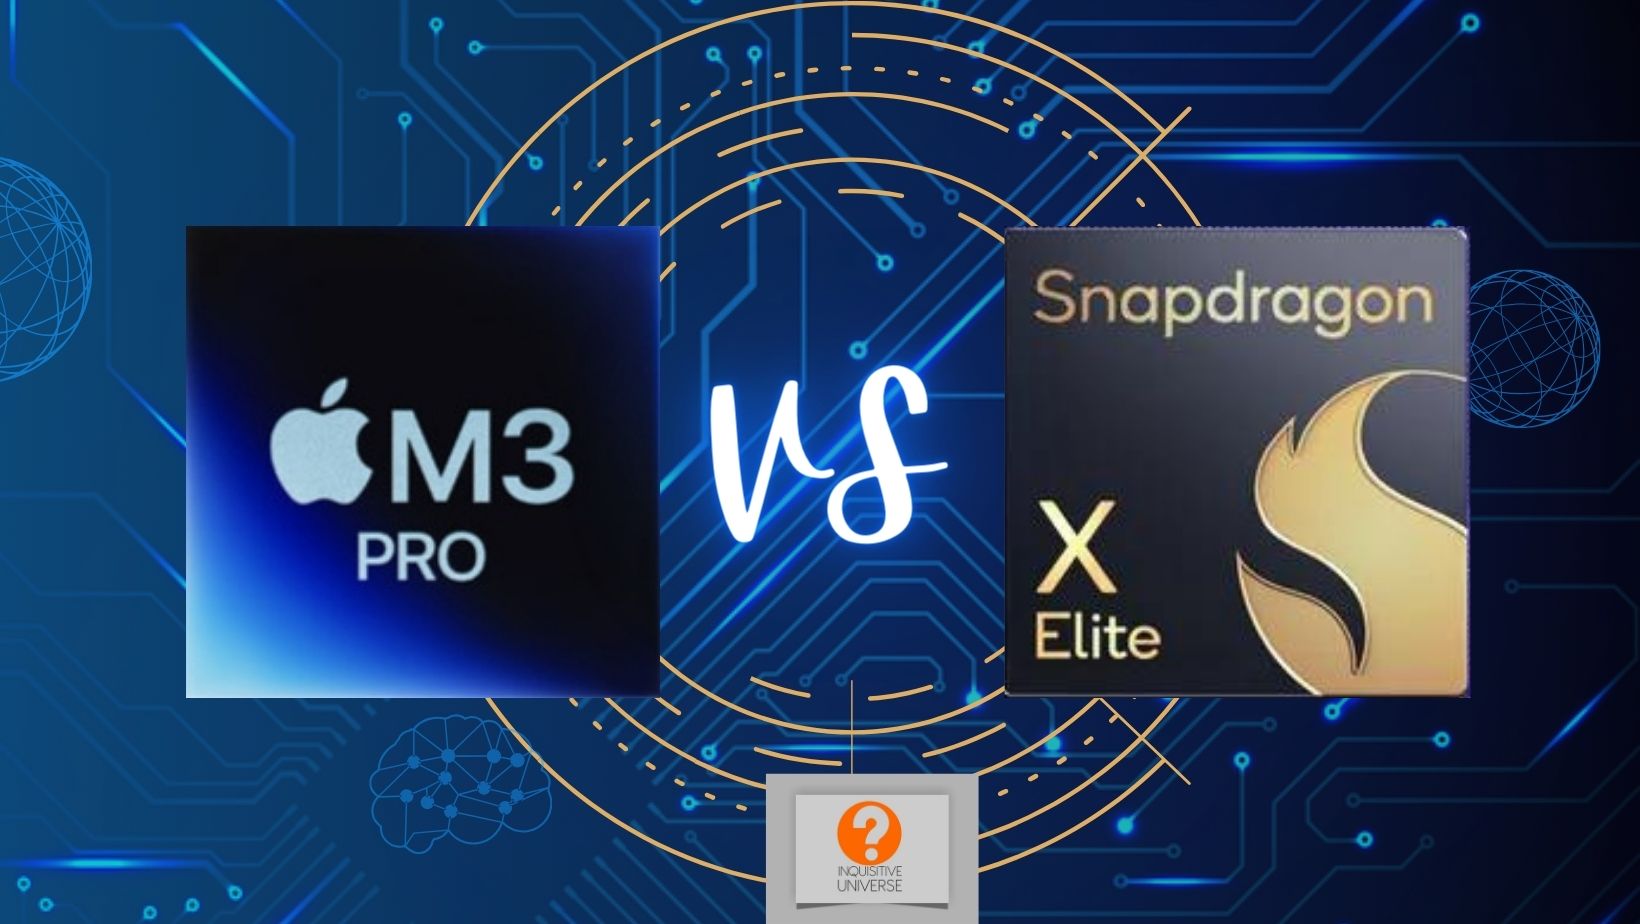 Apple M3 Pro Vs. Snapdragon X Elite